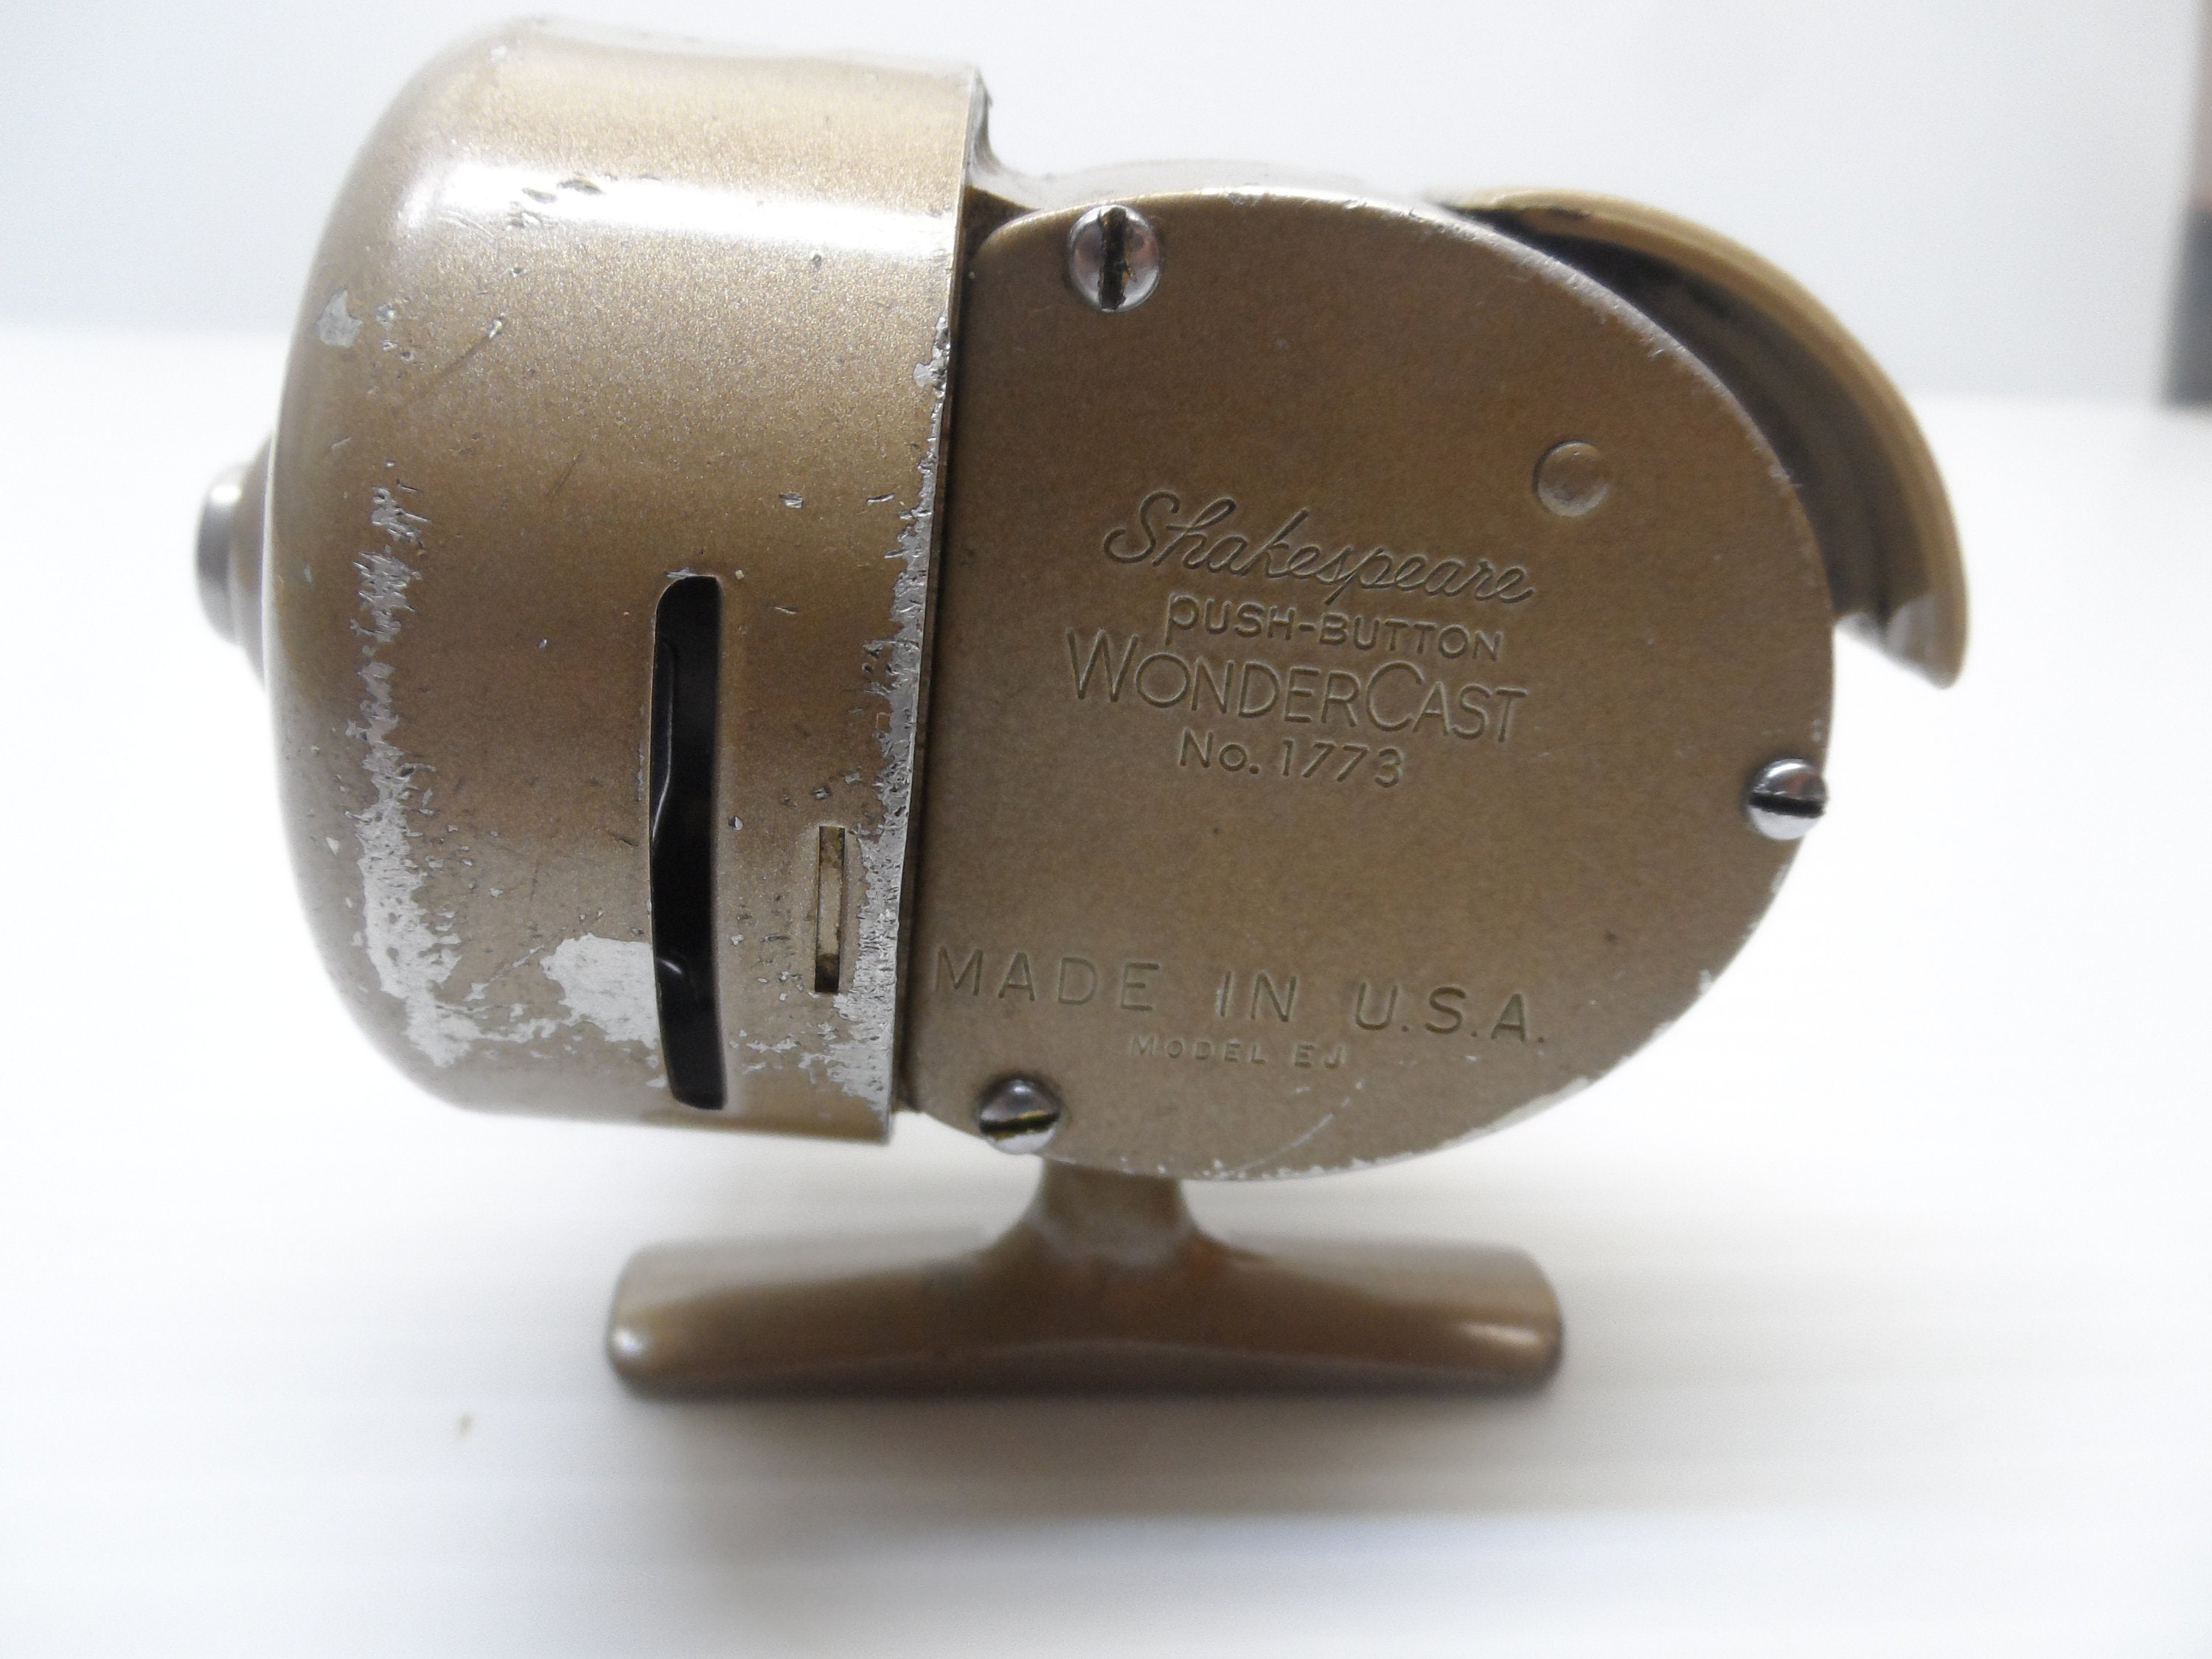 Vintage Shakespeare Fishing Reel No. 1773 Wondercast Model EJ Push Button.  -  Canada